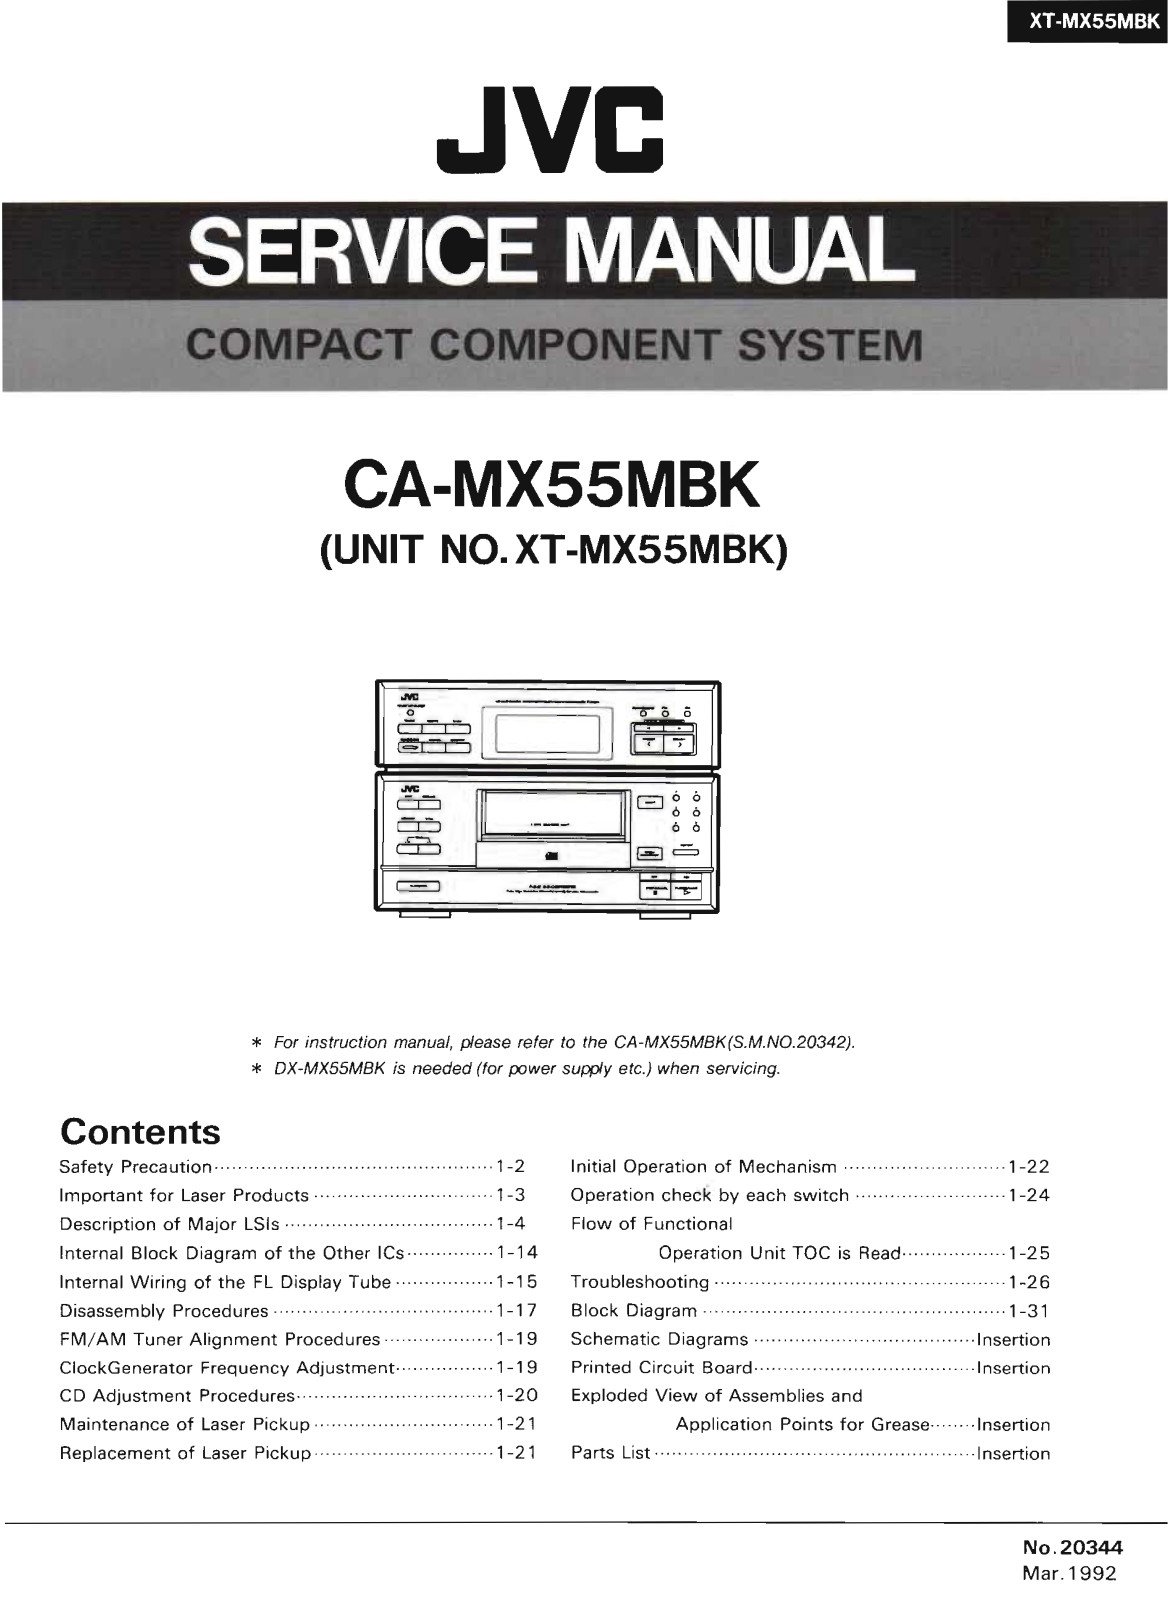 Jvc CA-MX55-MBK Service Manual